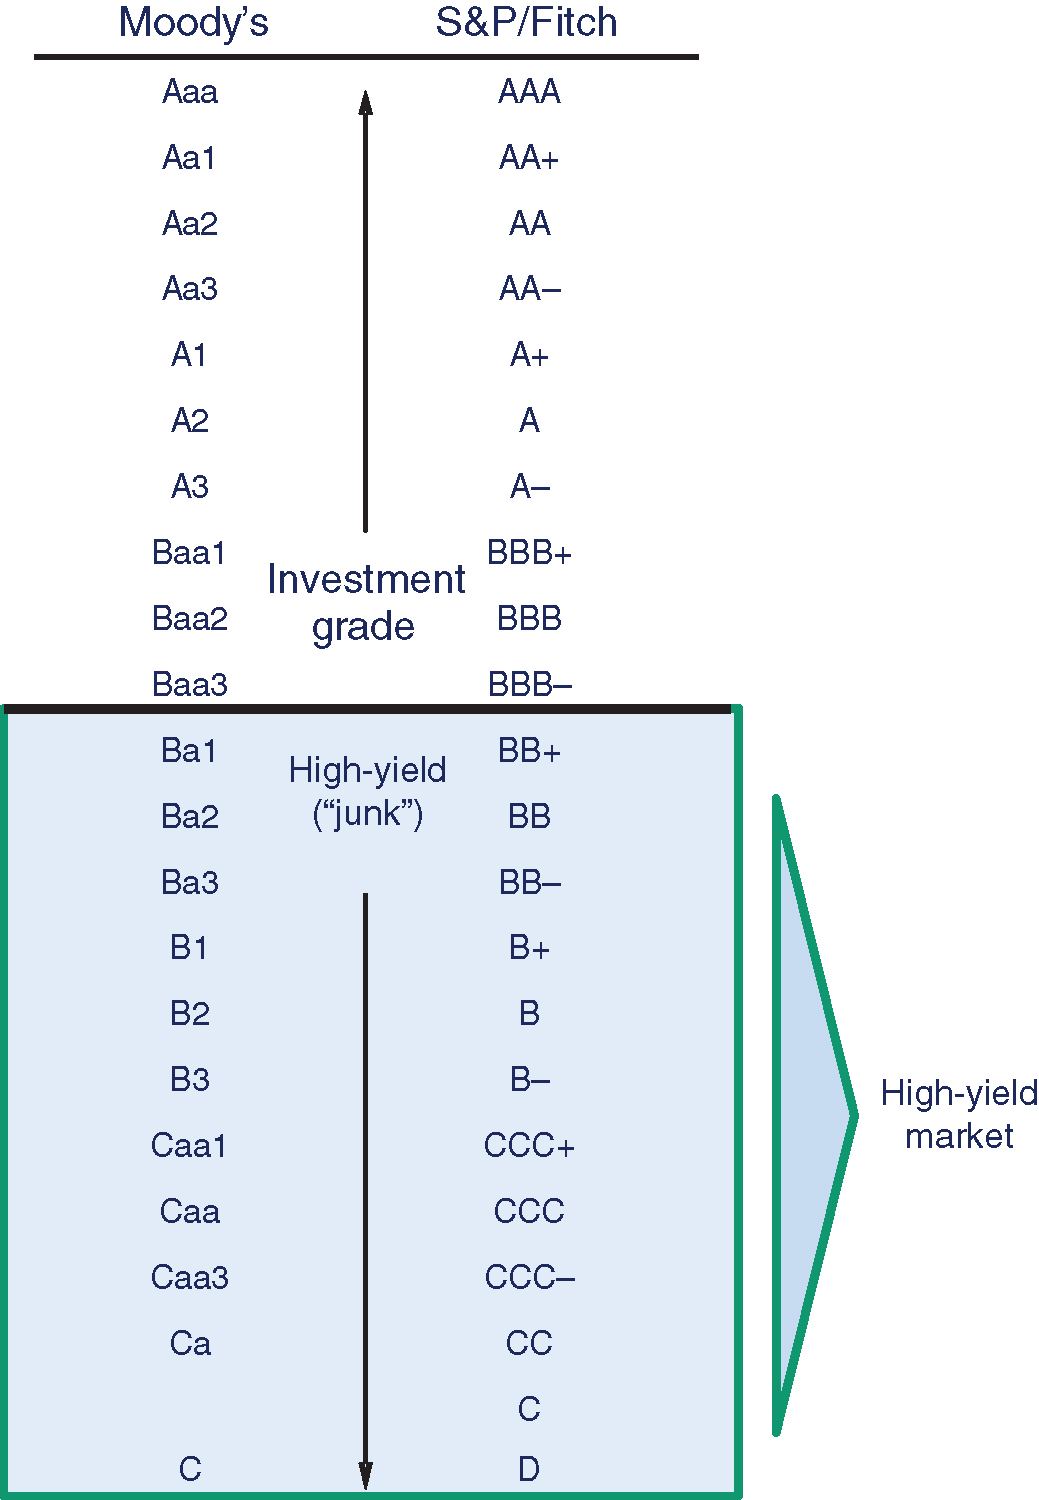 Ba3/BB-: Definition, How Bond Ratings Work, Yields & Risks